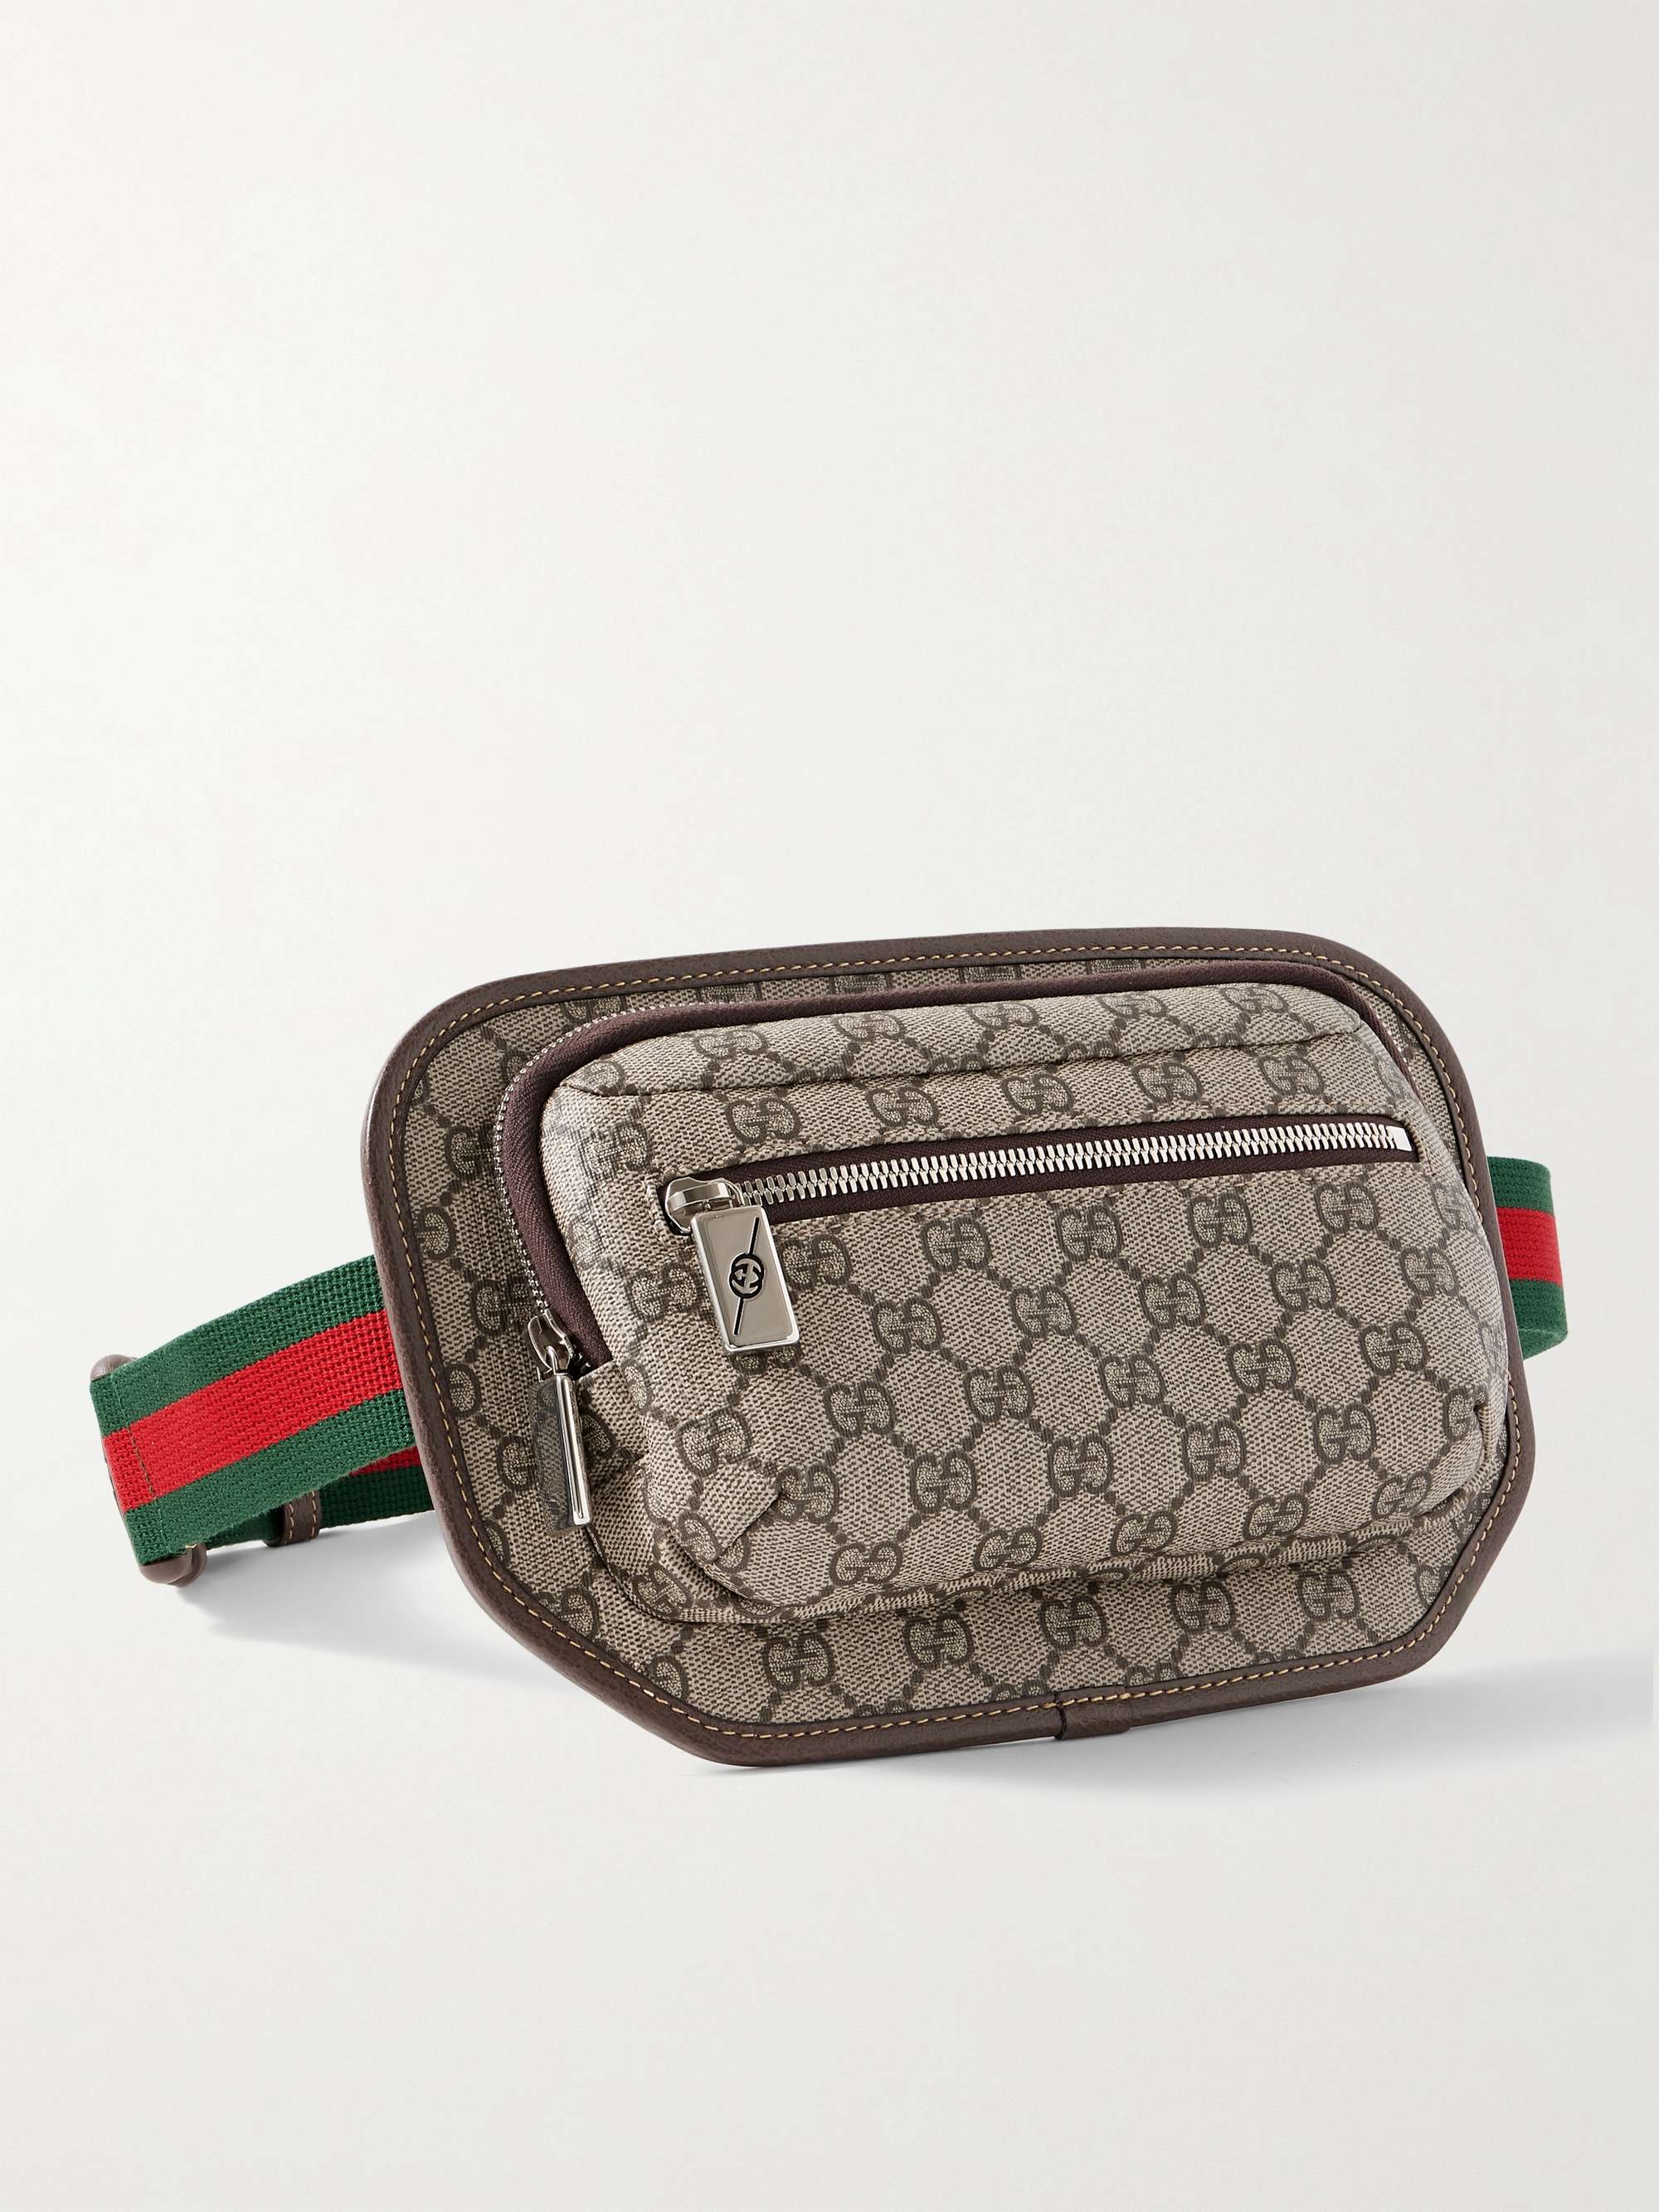 Gucci Belt Bags for Women, Ophidia Bum Bag